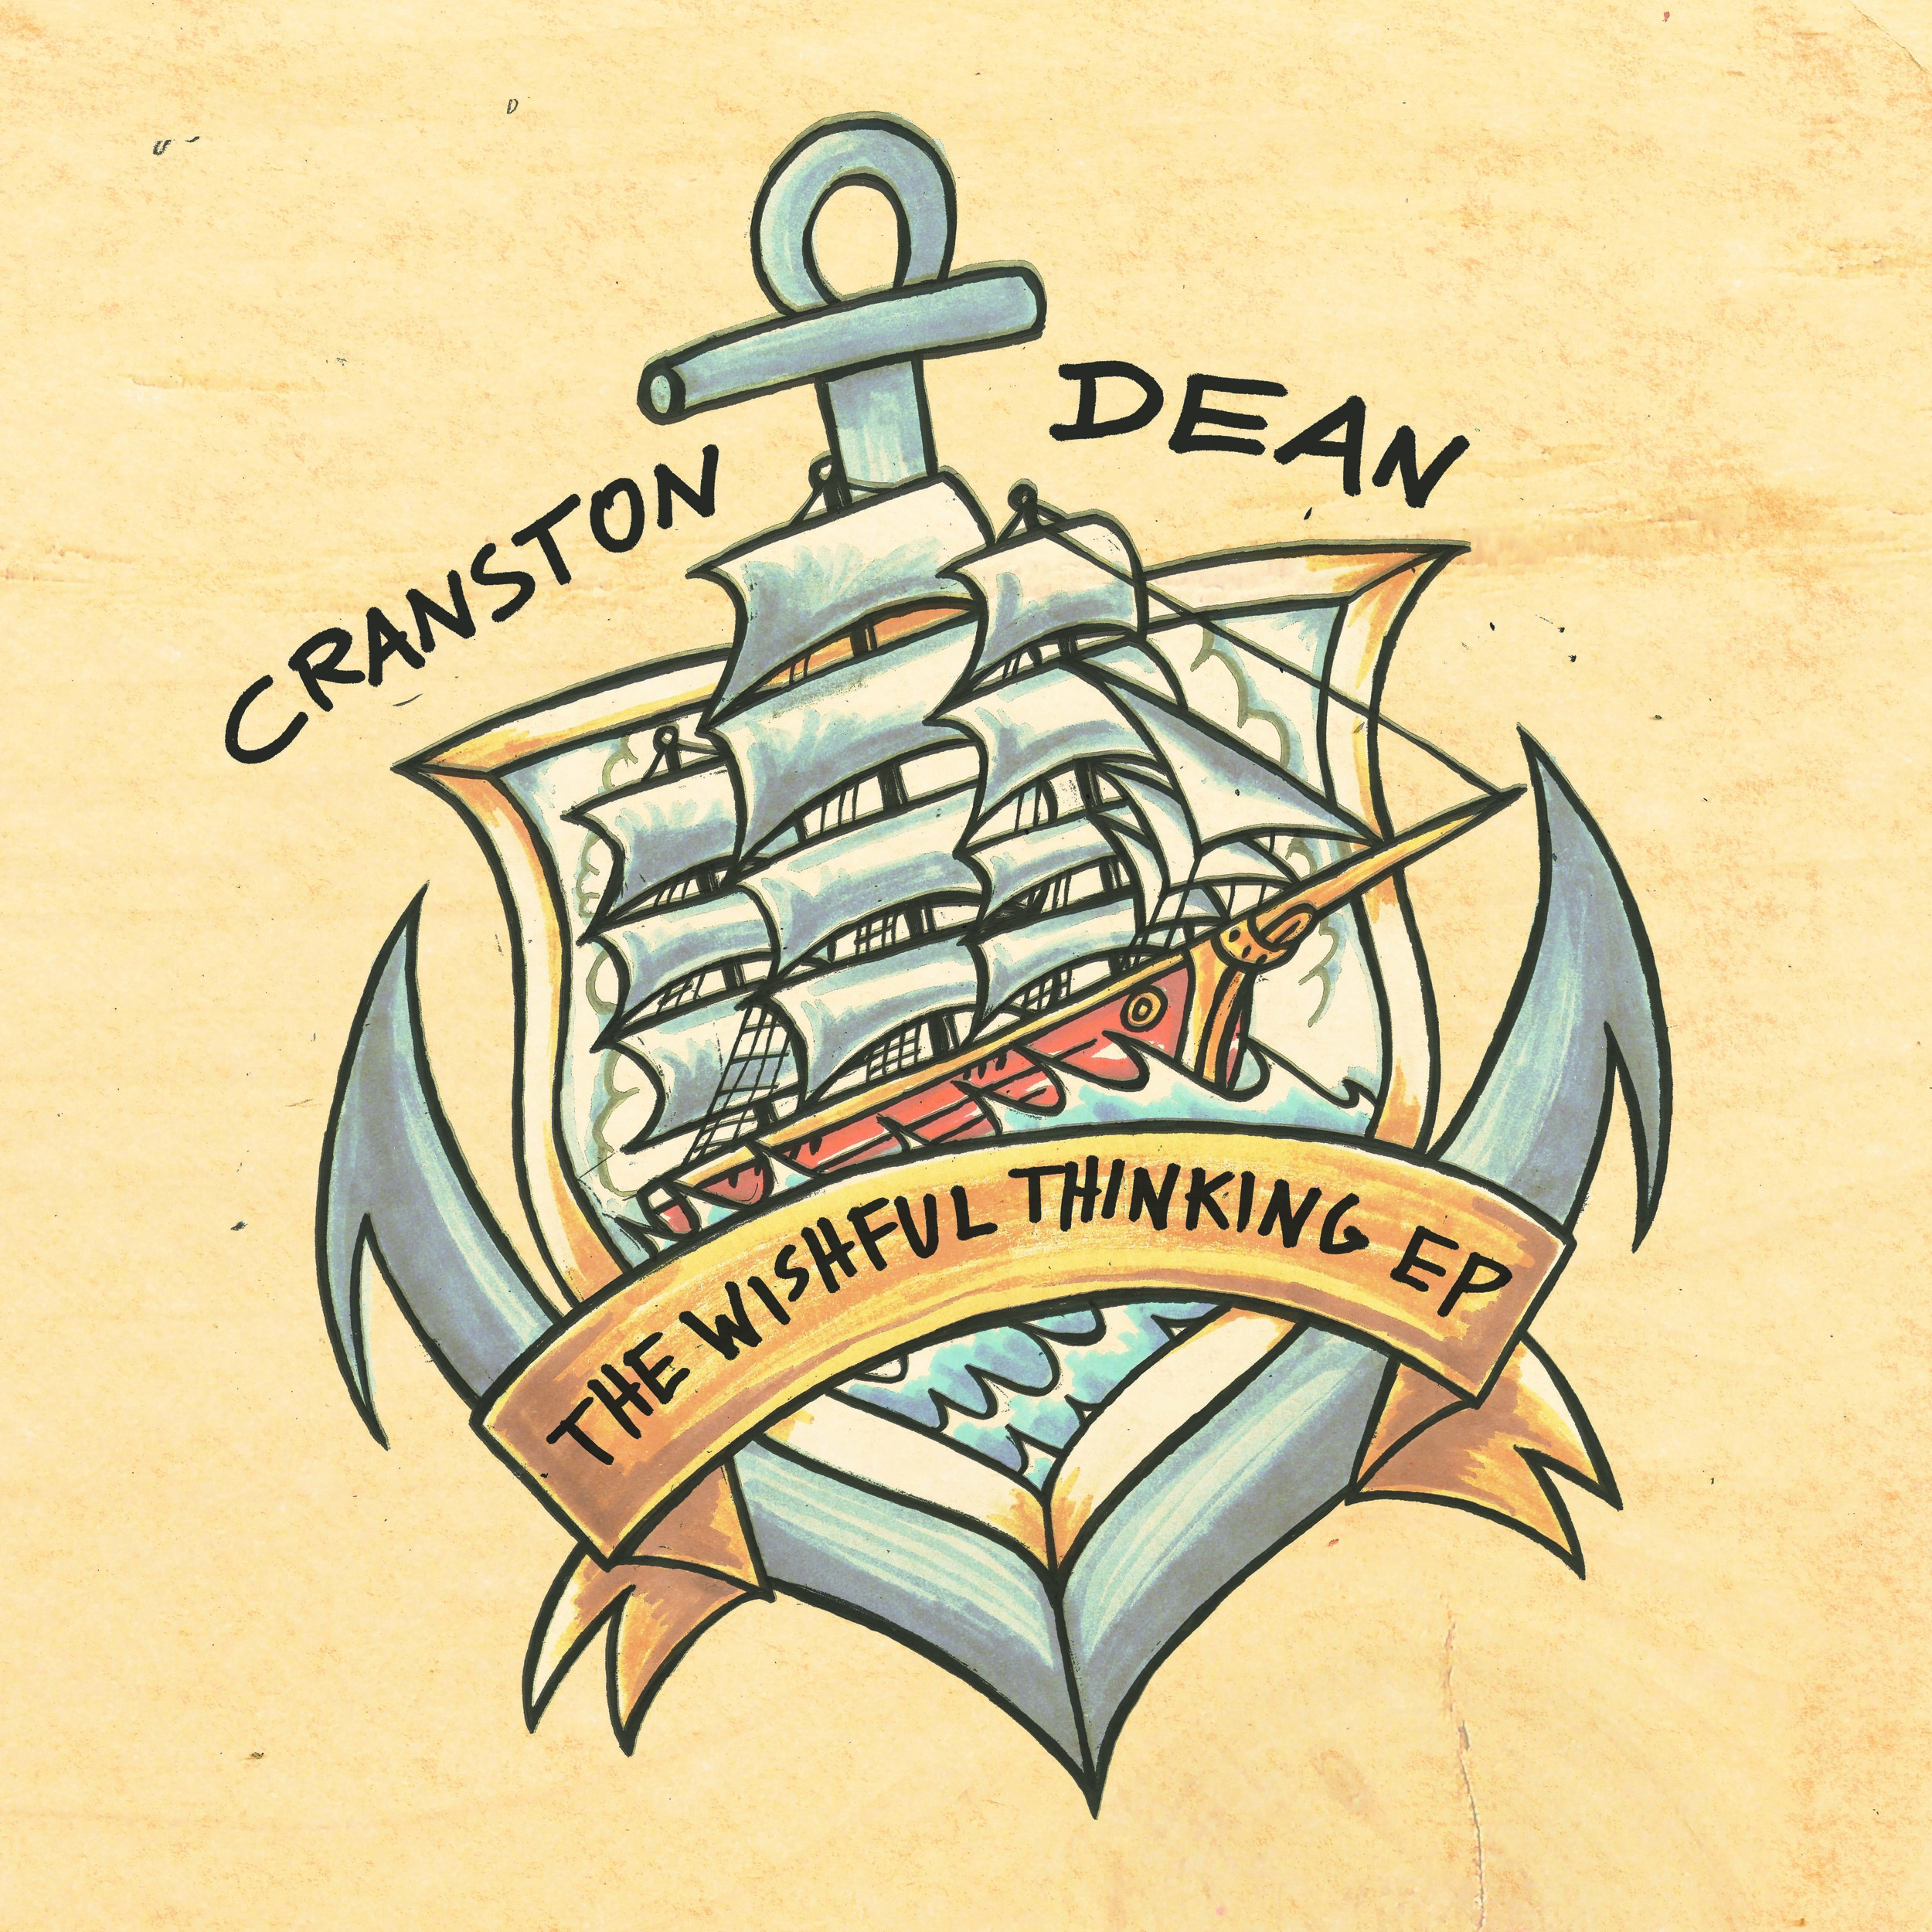 Cranston Dean - The Wishful Thinking EP